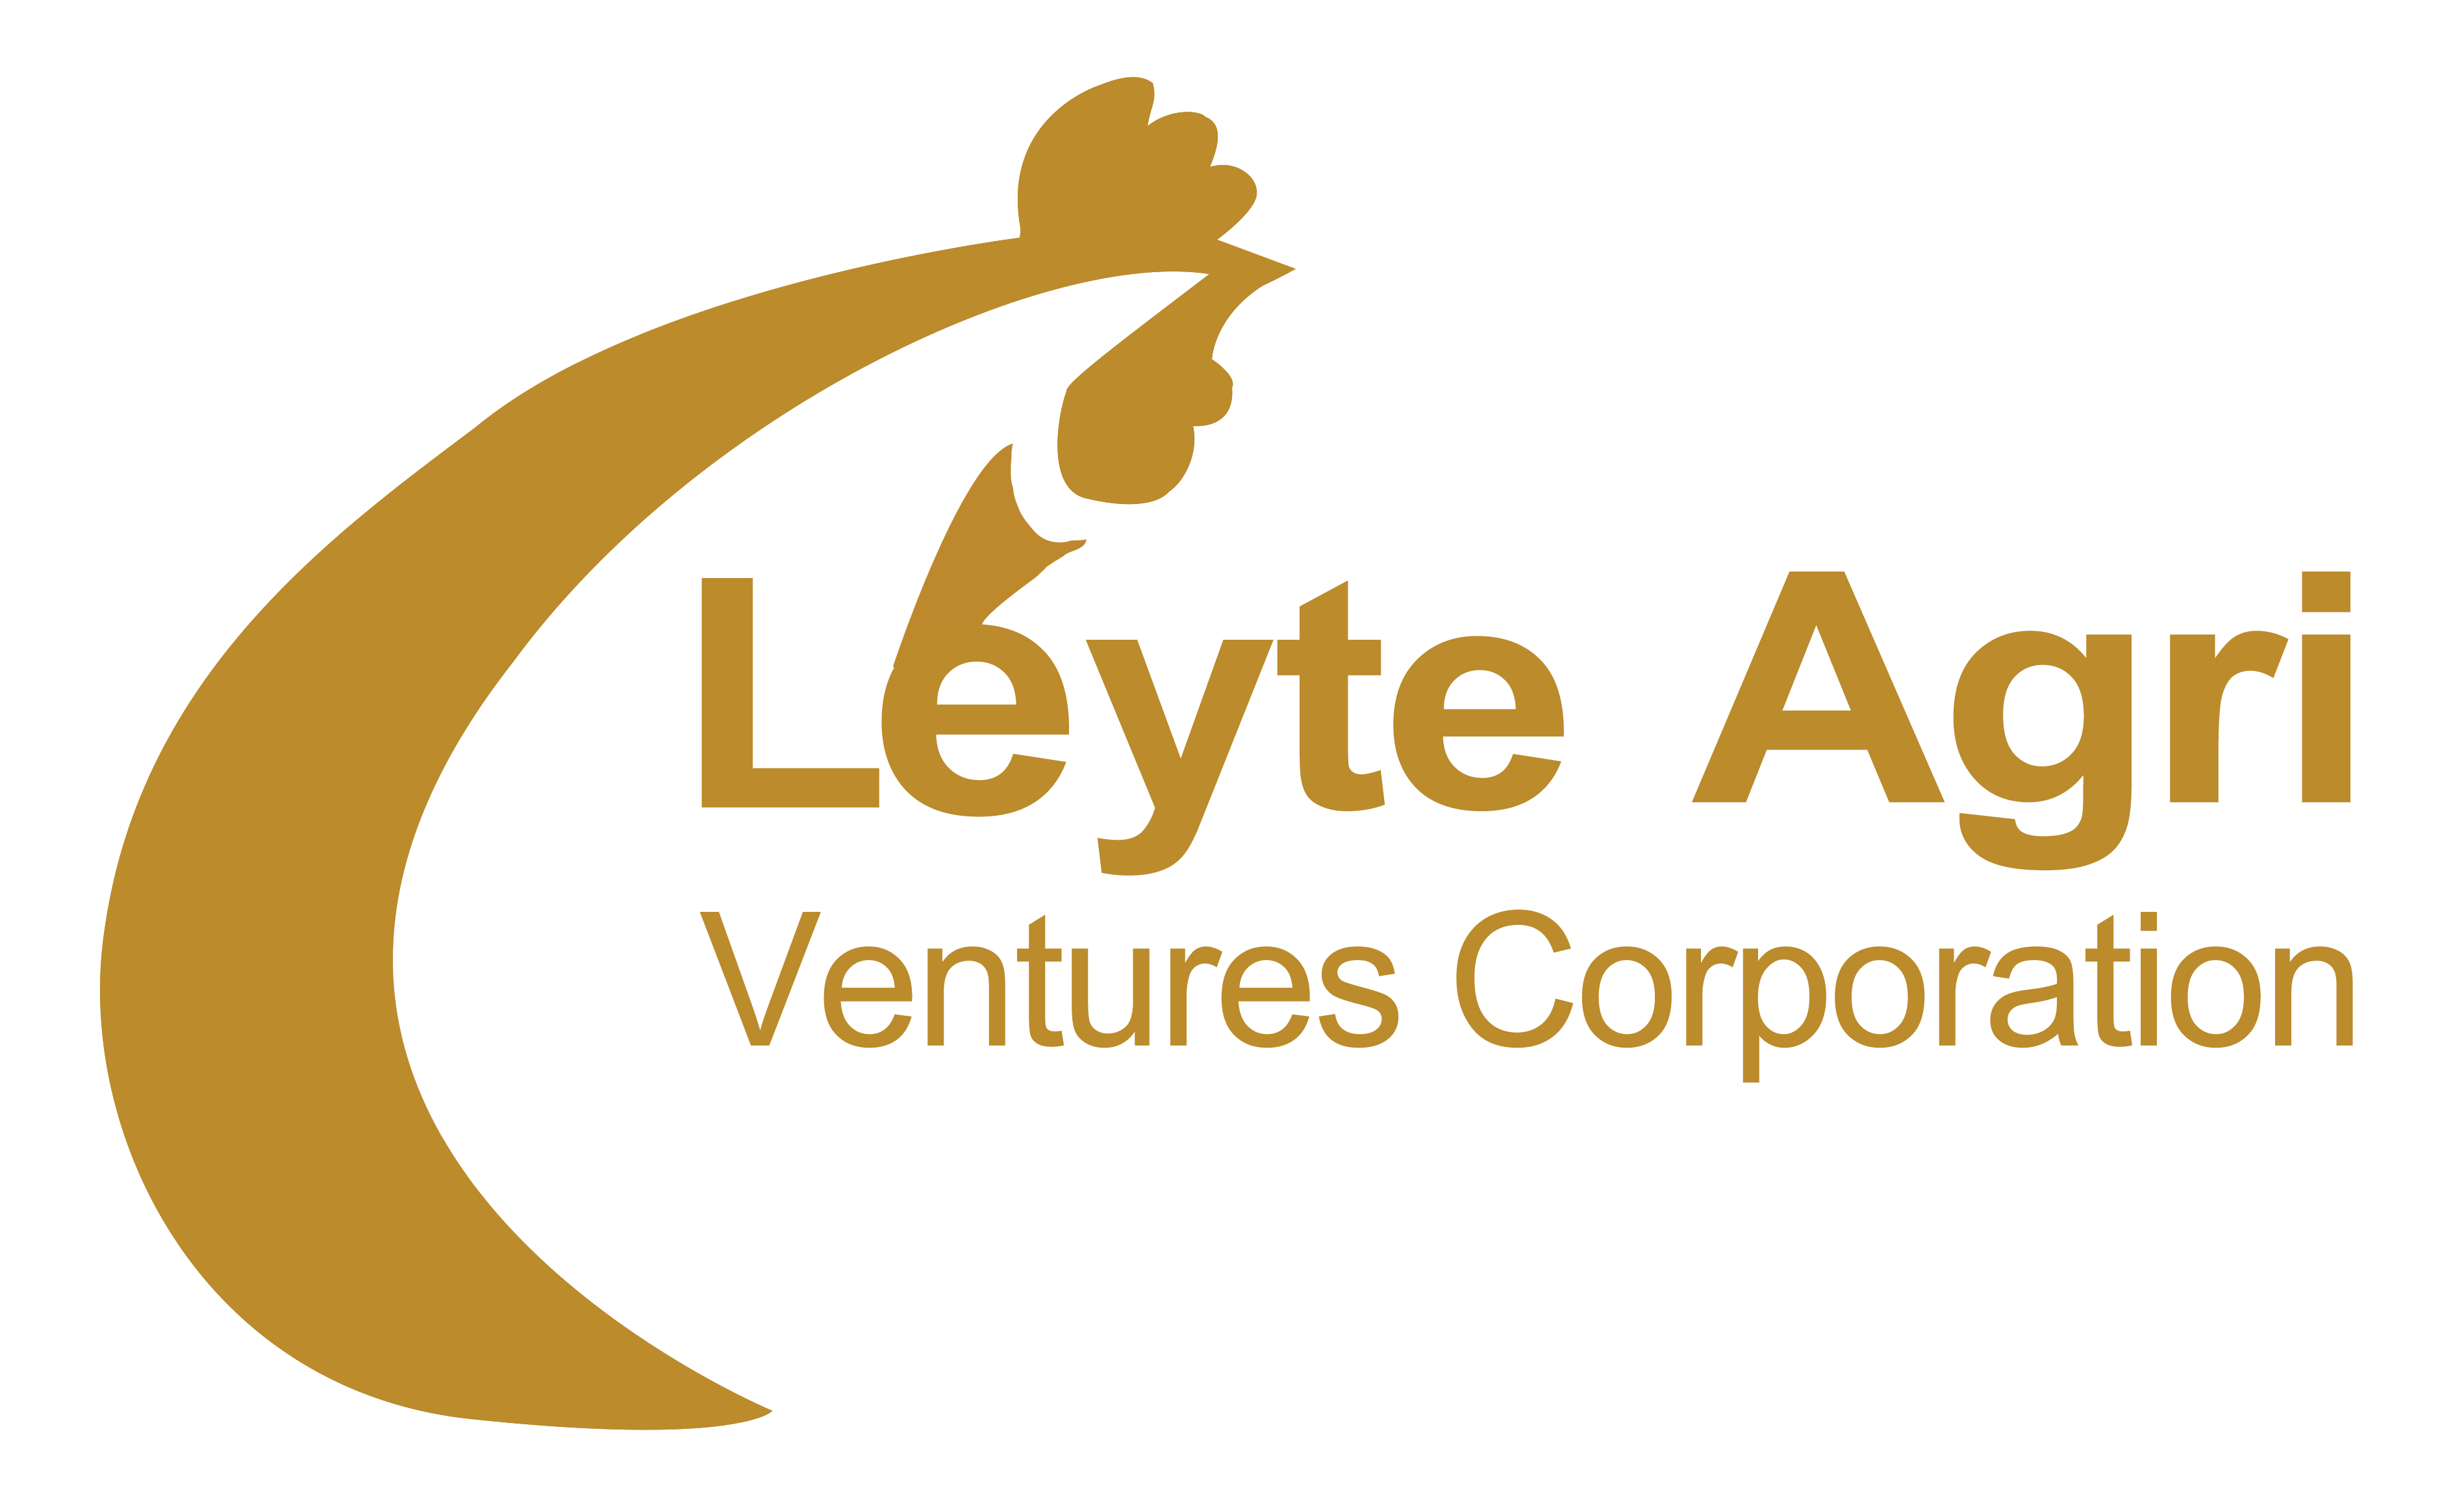 Login Leyte Agri Ventures Corp.